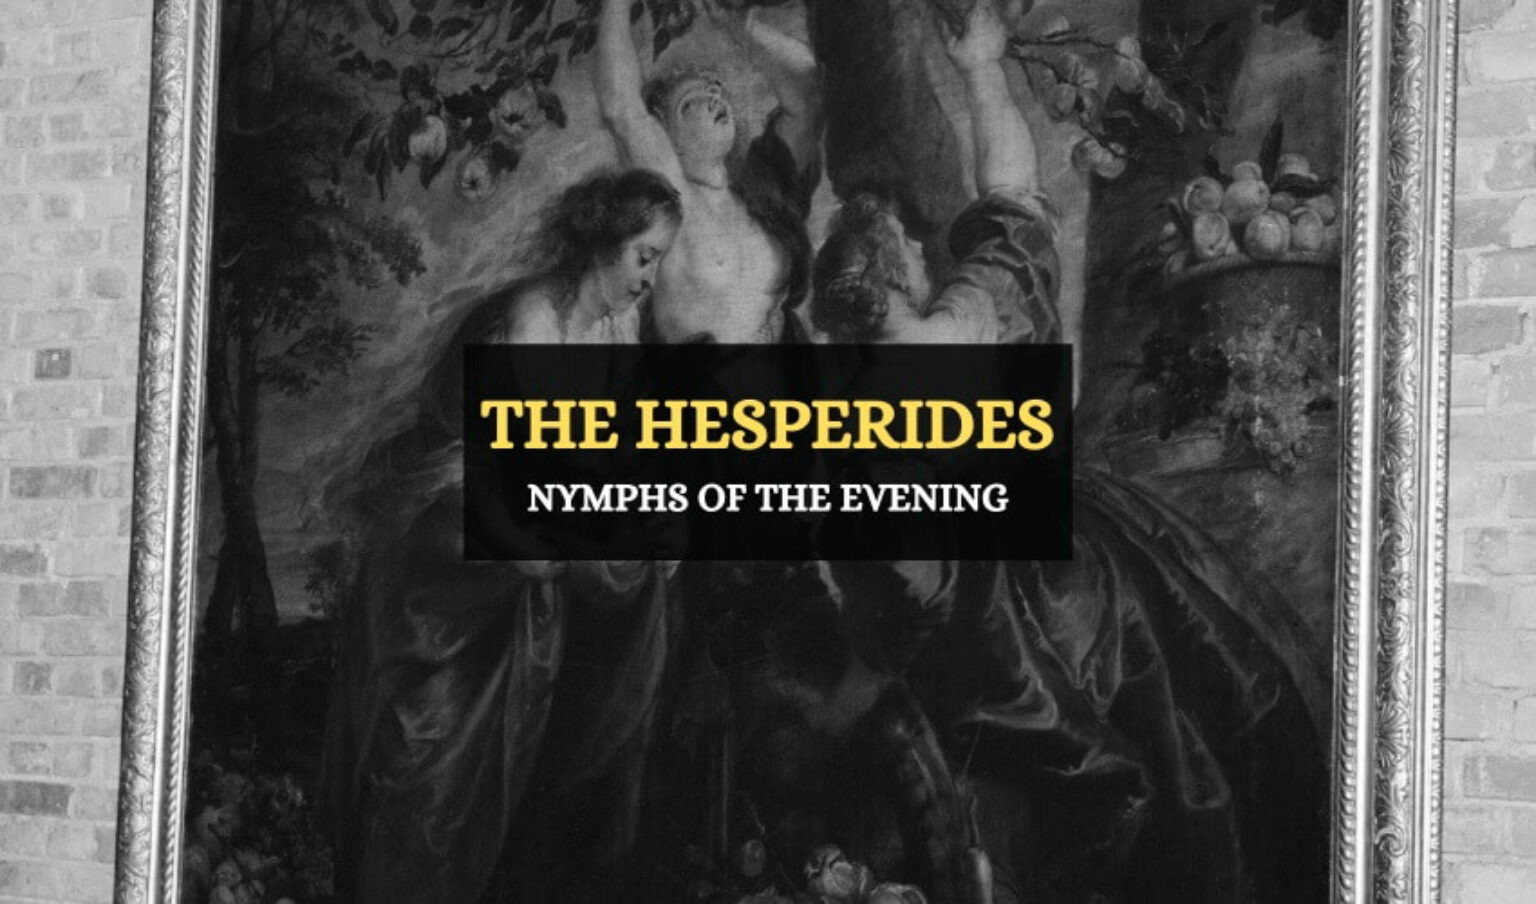 define hesperides